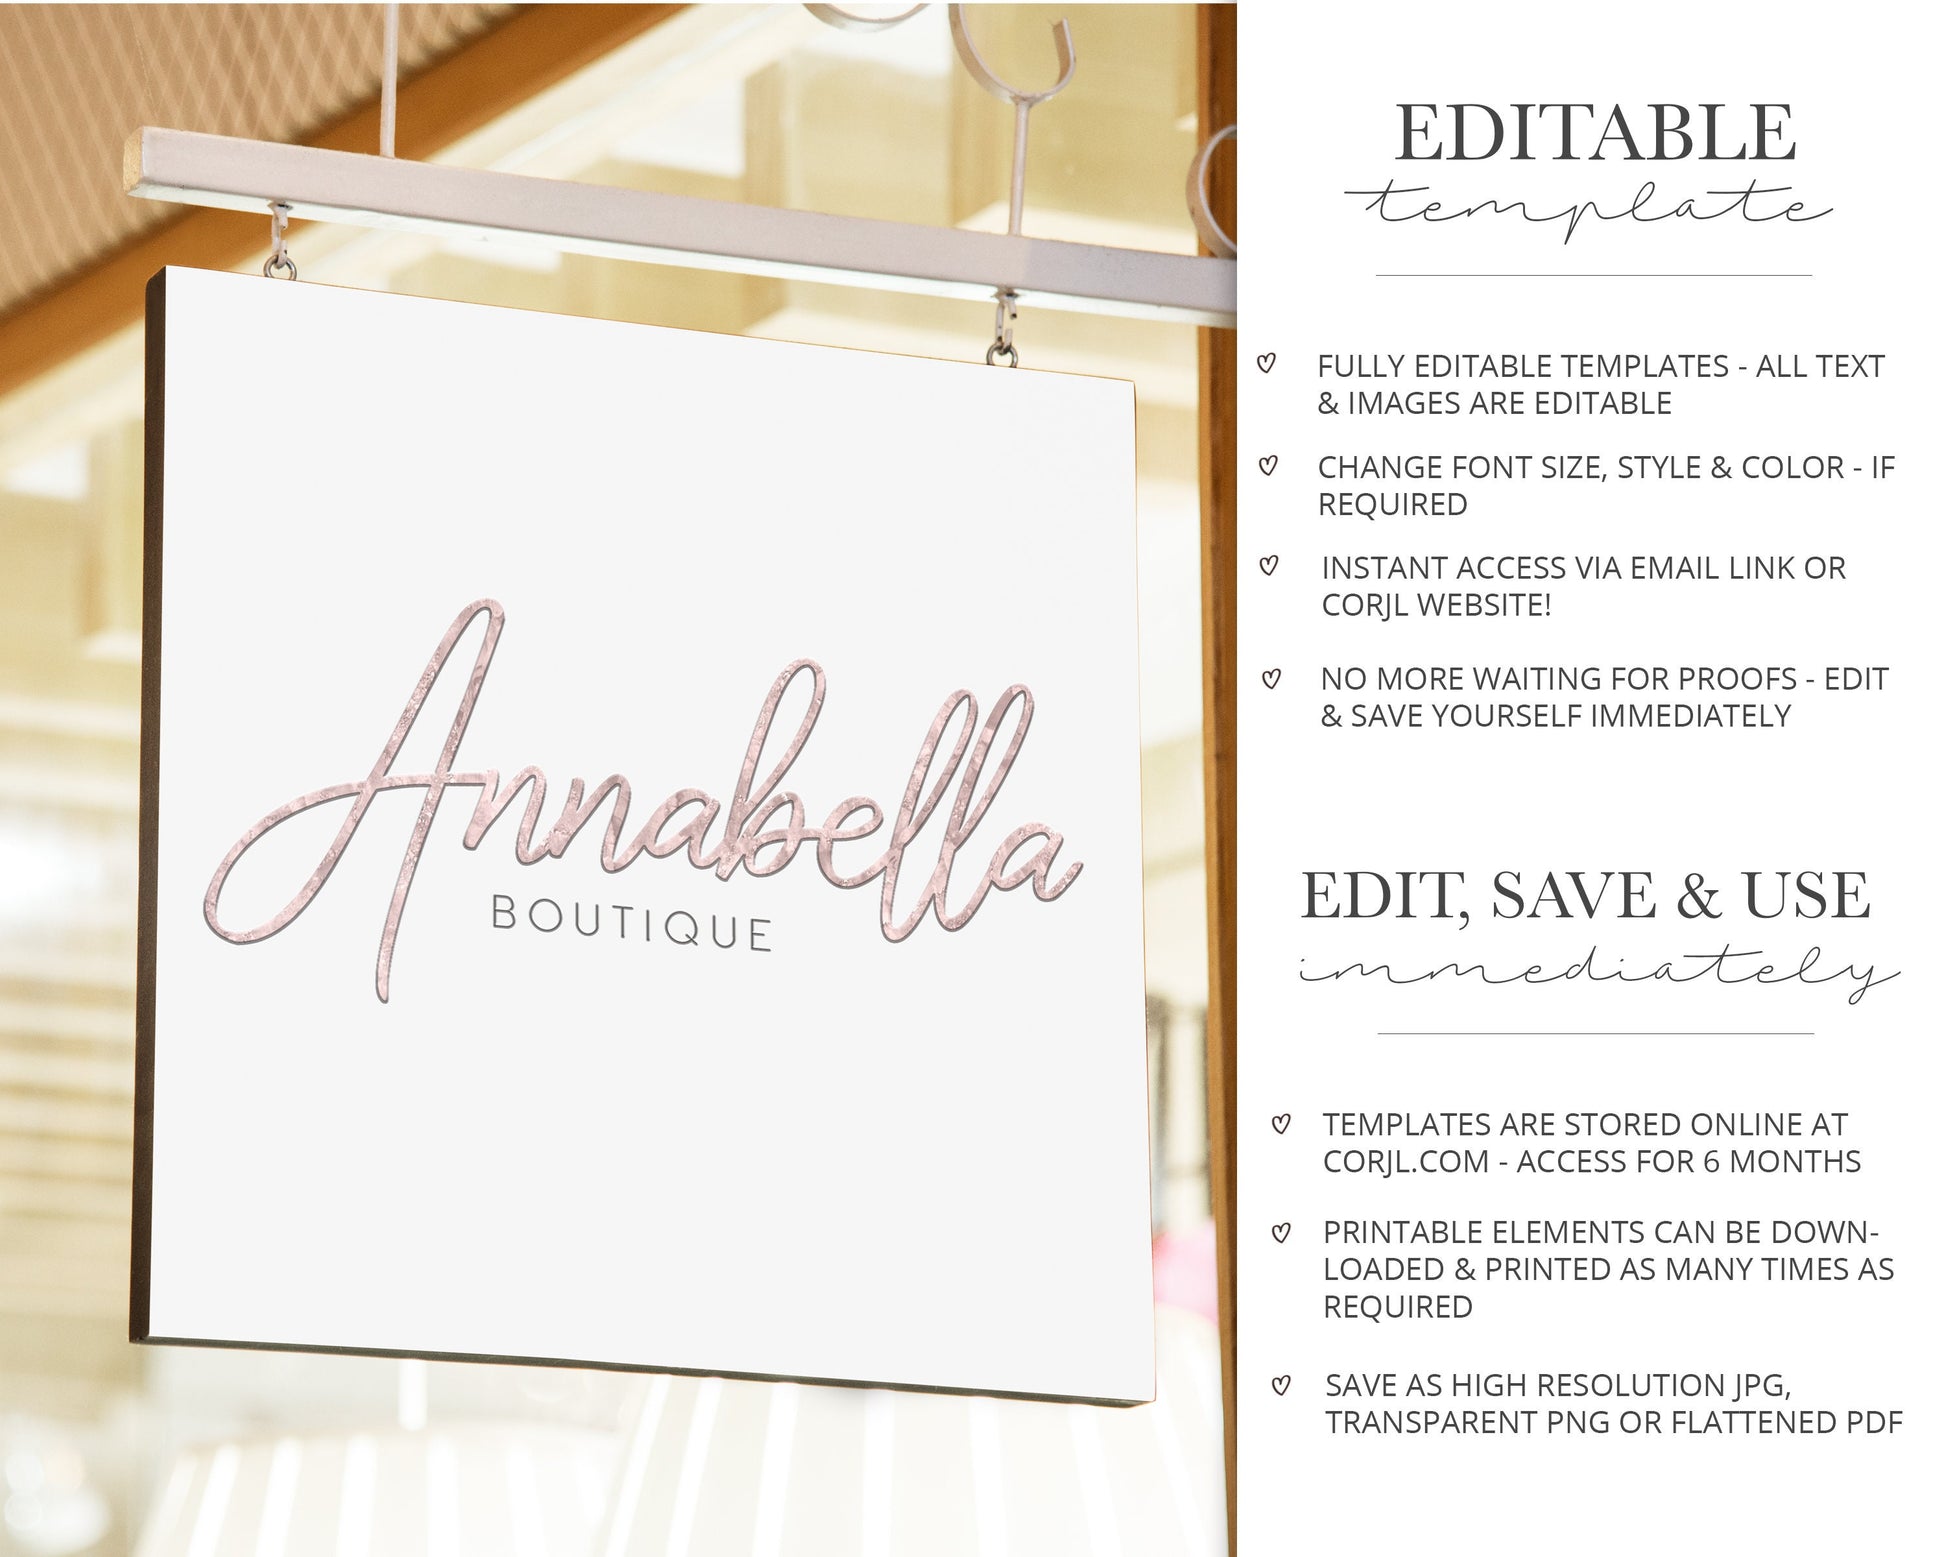 DIY Full Branding Kit Instant Edit & Download Minimal Rose Gold Signature Branding  |  Edit Yourself Online!  | Premade Business Logo AB-001